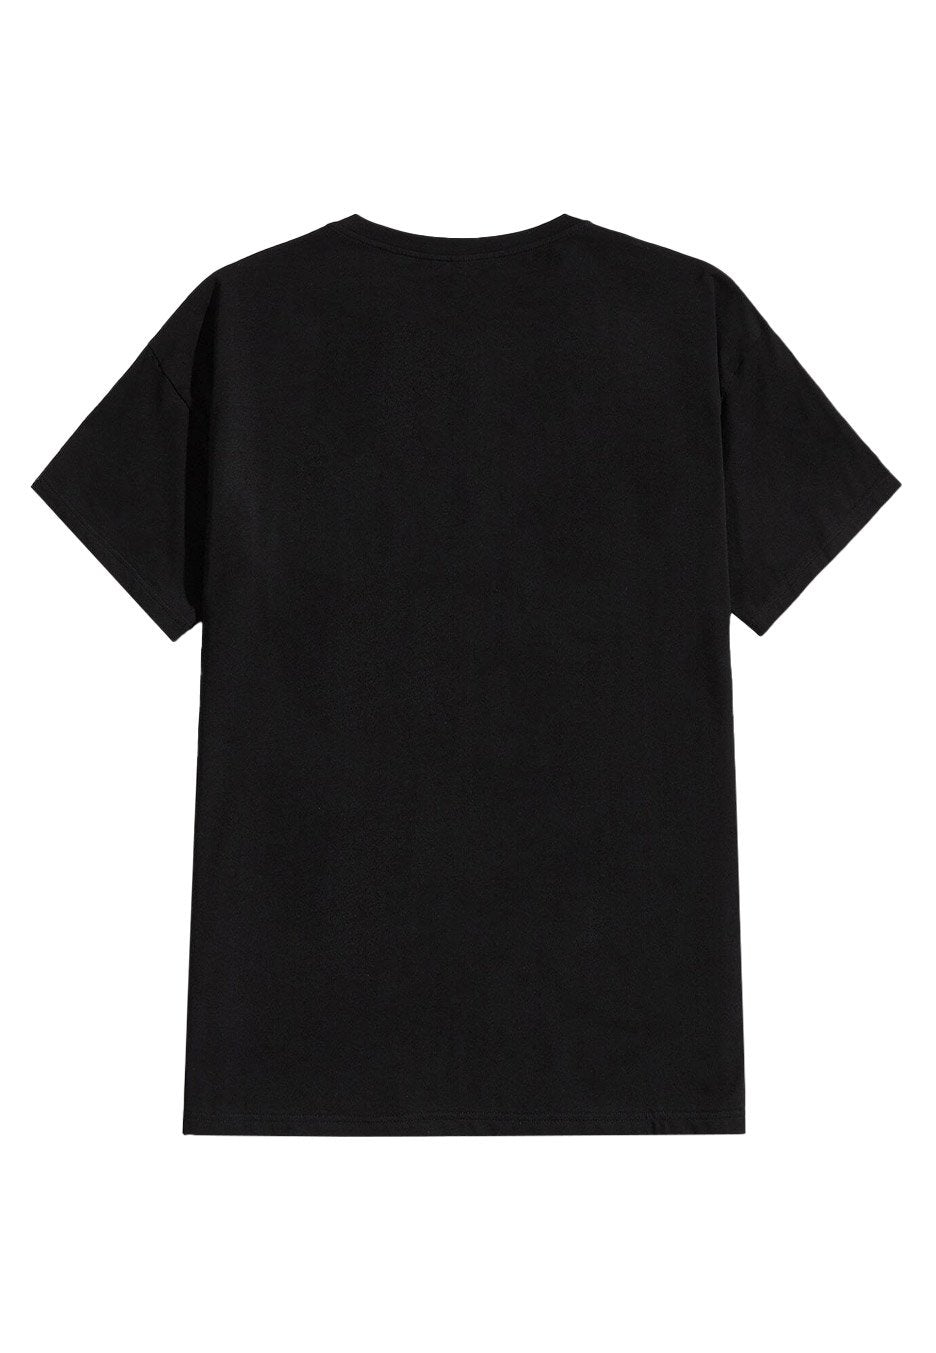 Trivium - Skelly Frame - T-Shirt